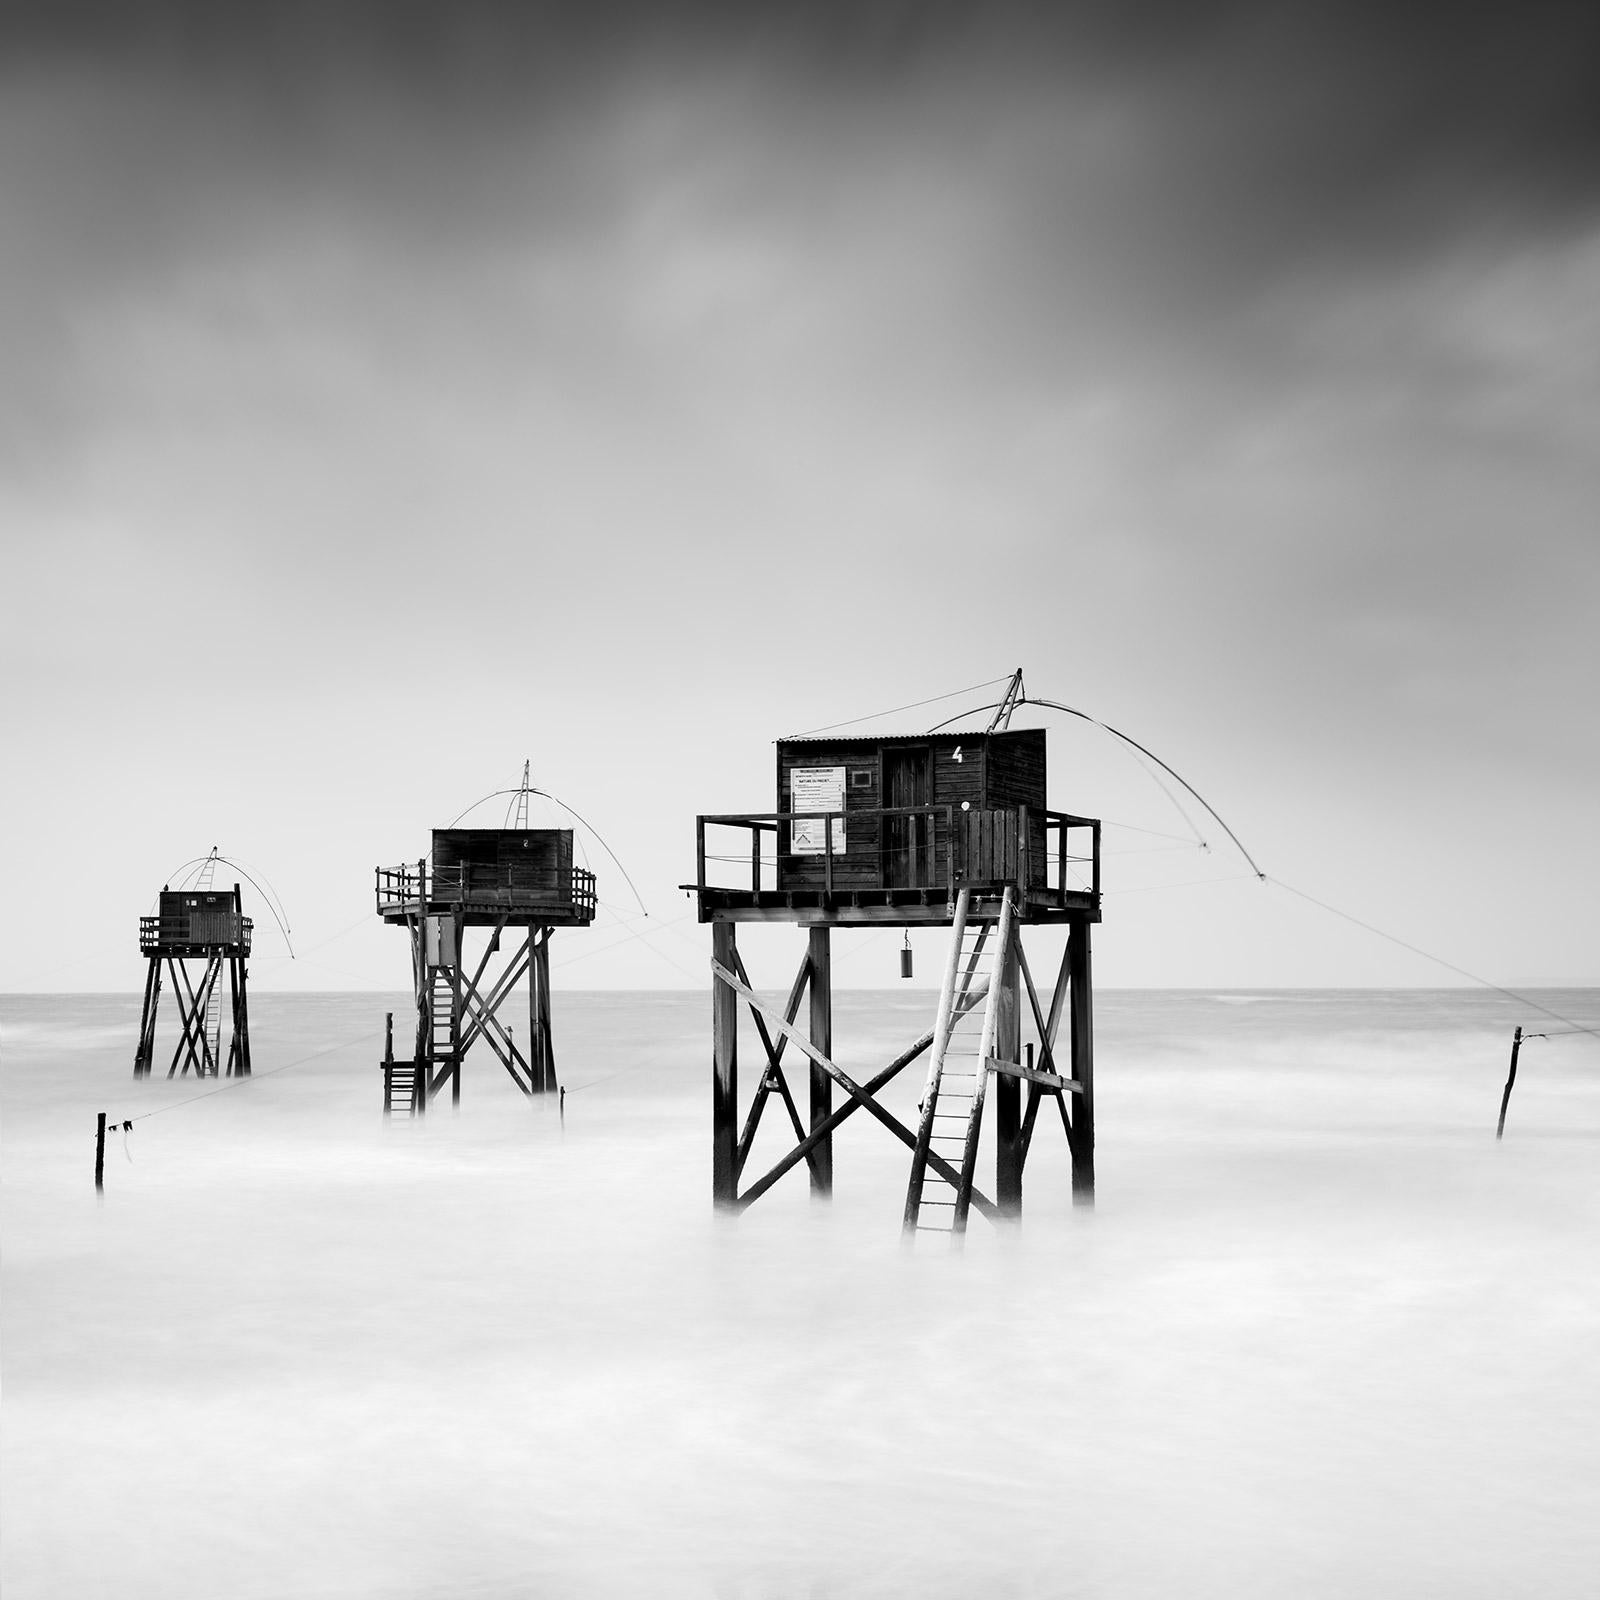 Gerald Berghammer Landscape Photograph - Fishing Hut on Stilts, atlantic coast, France, black and white landscape photo